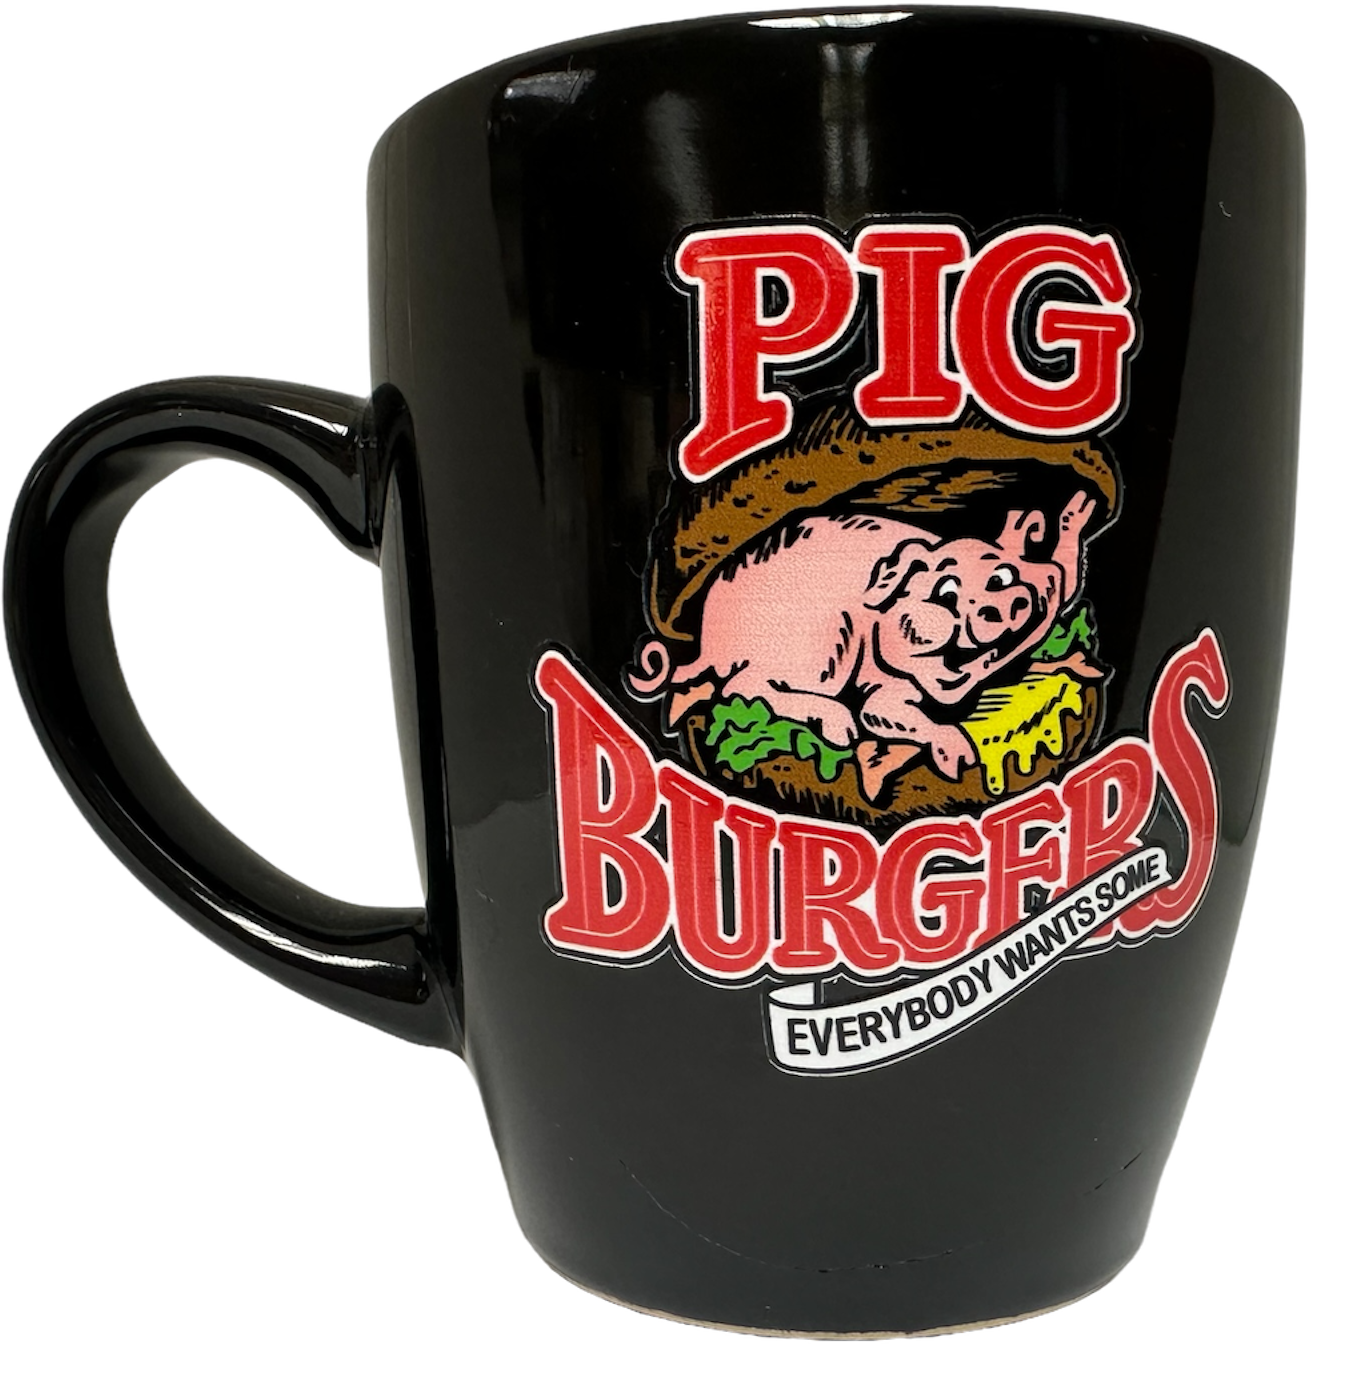 BETTER OFF DEAD : "PIG BURGERS" COFFEE MUG